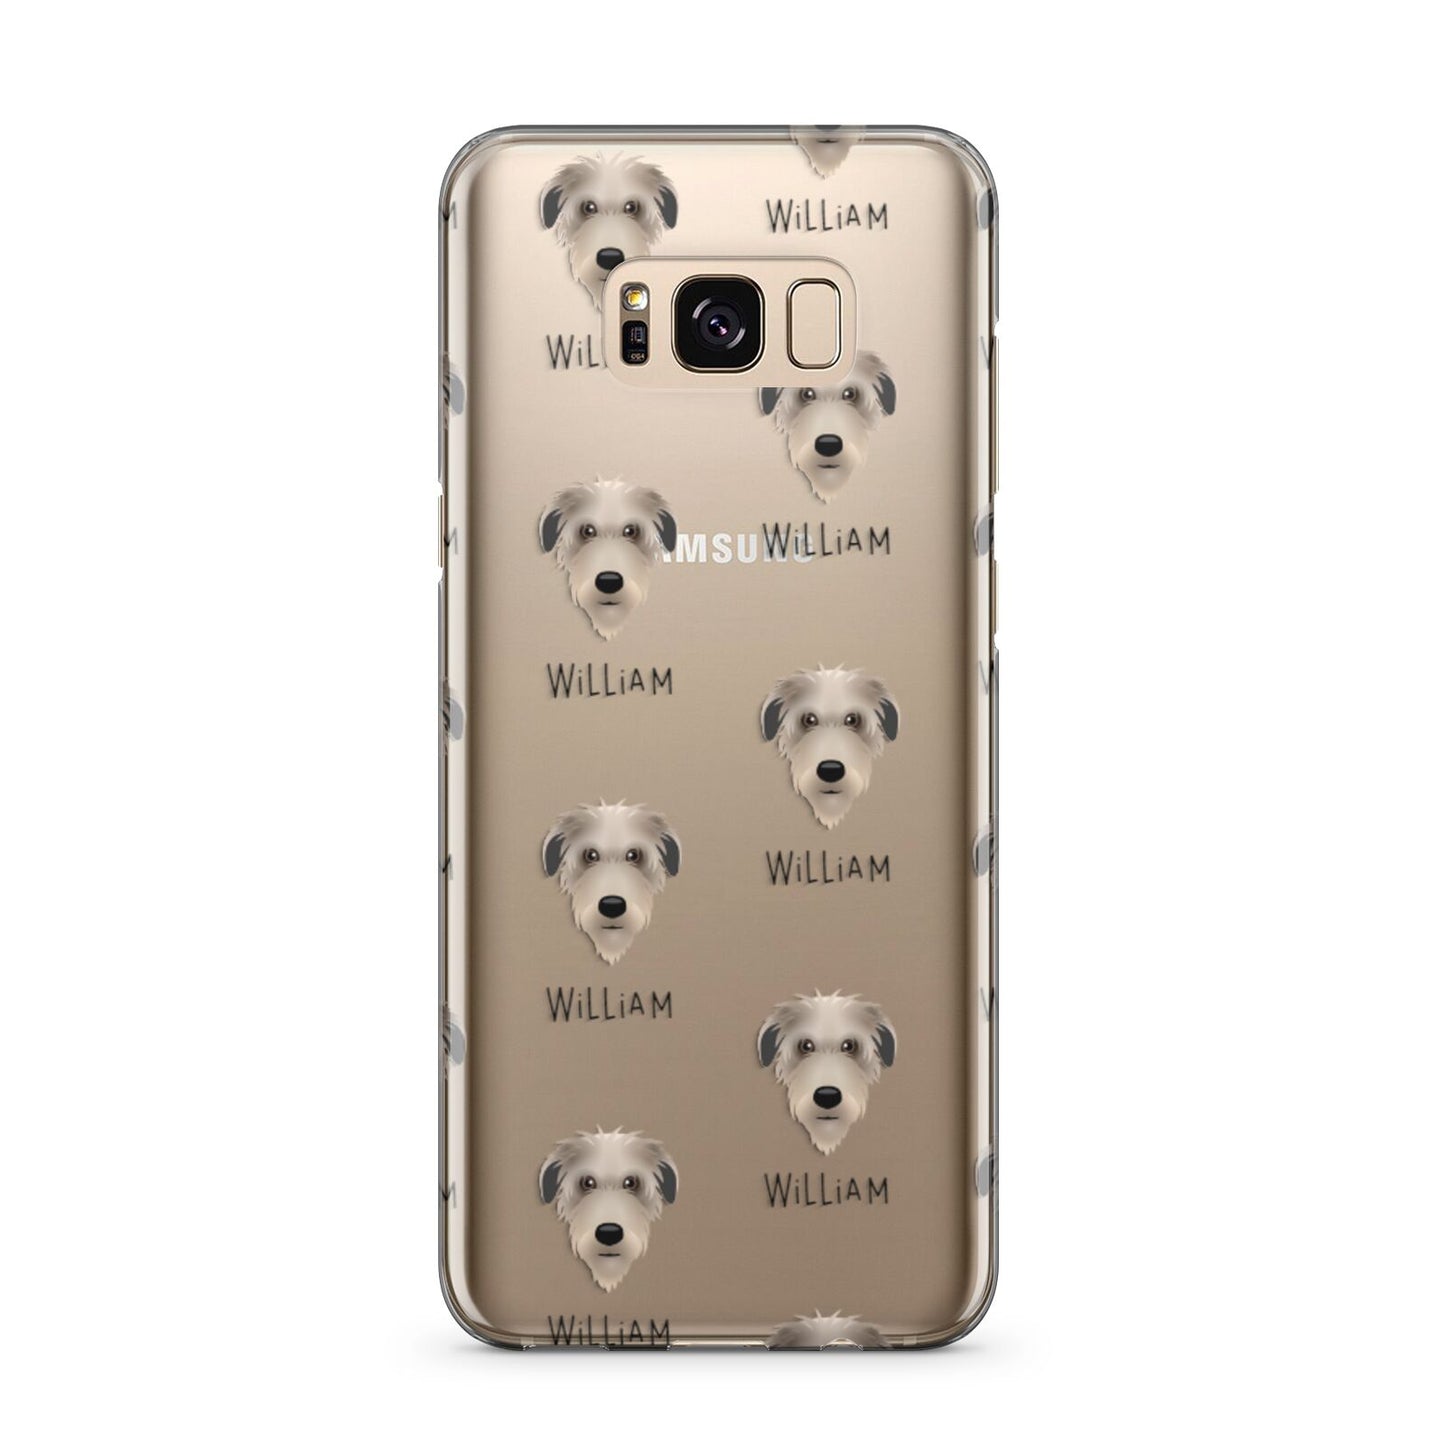 Deerhound Icon with Name Samsung Galaxy S8 Plus Case